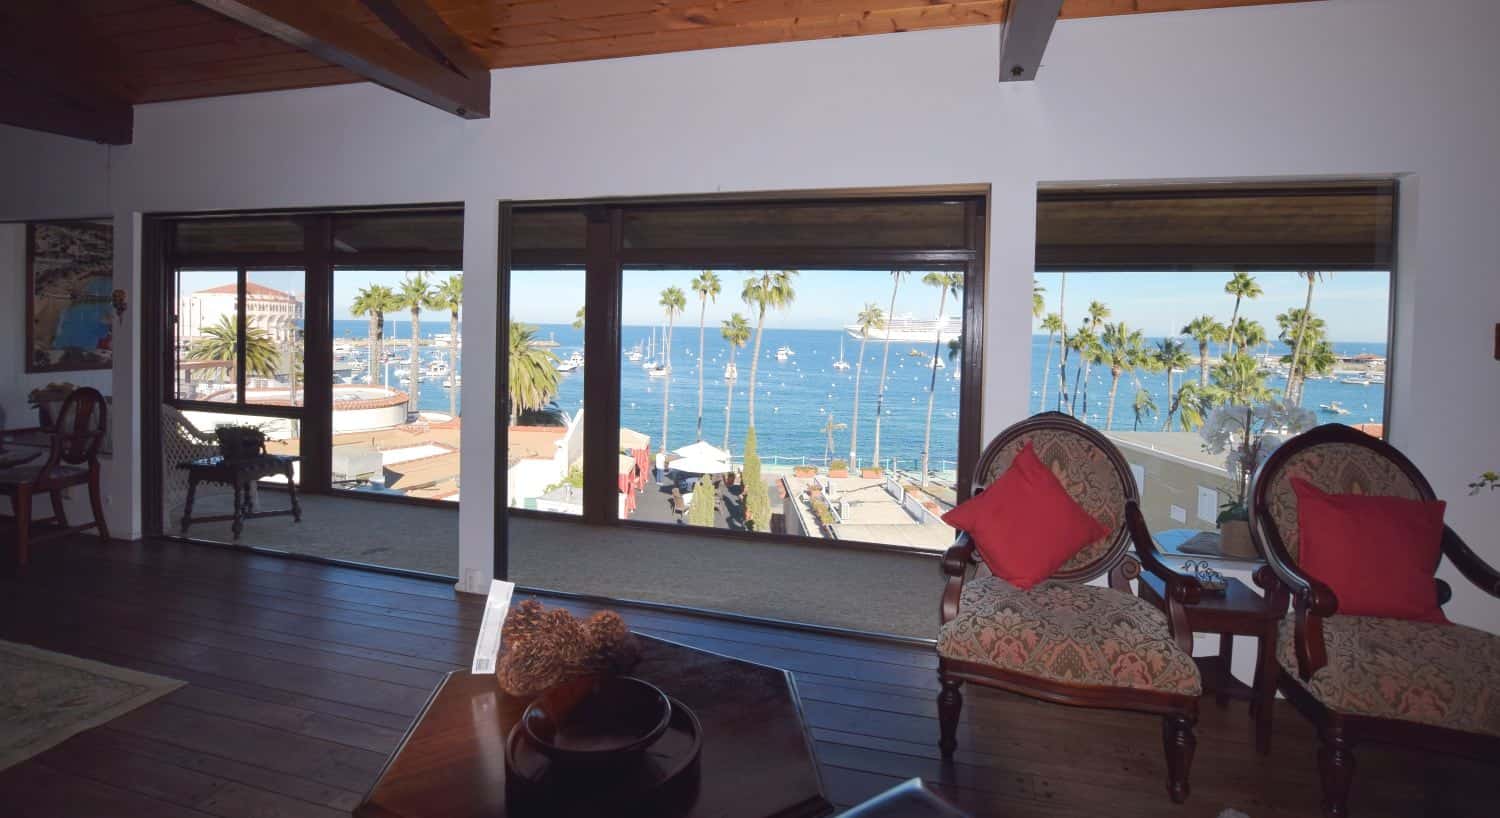 Large meeting room with wood flooring and dark wood furniture overlooking view of ocean marina